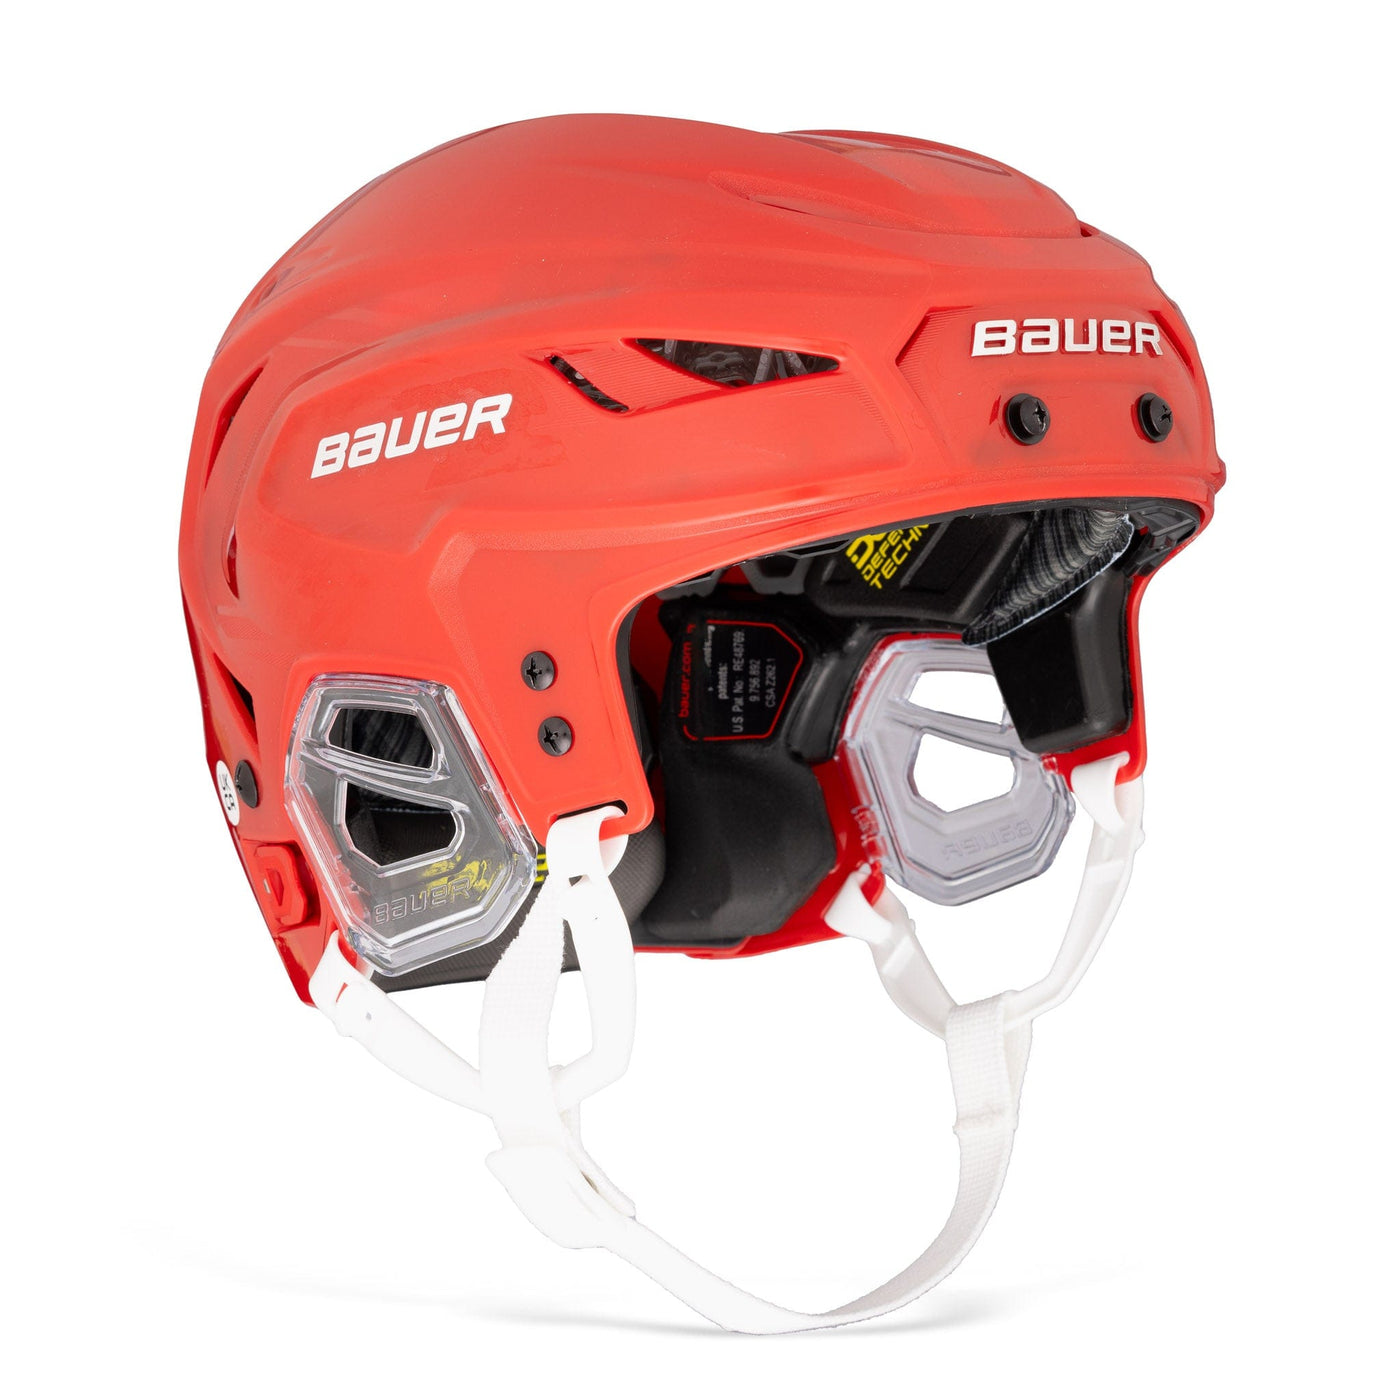 Bauer Vapor HyperLite 2 Hockey Helmet - The Hockey Shop Source For Sports